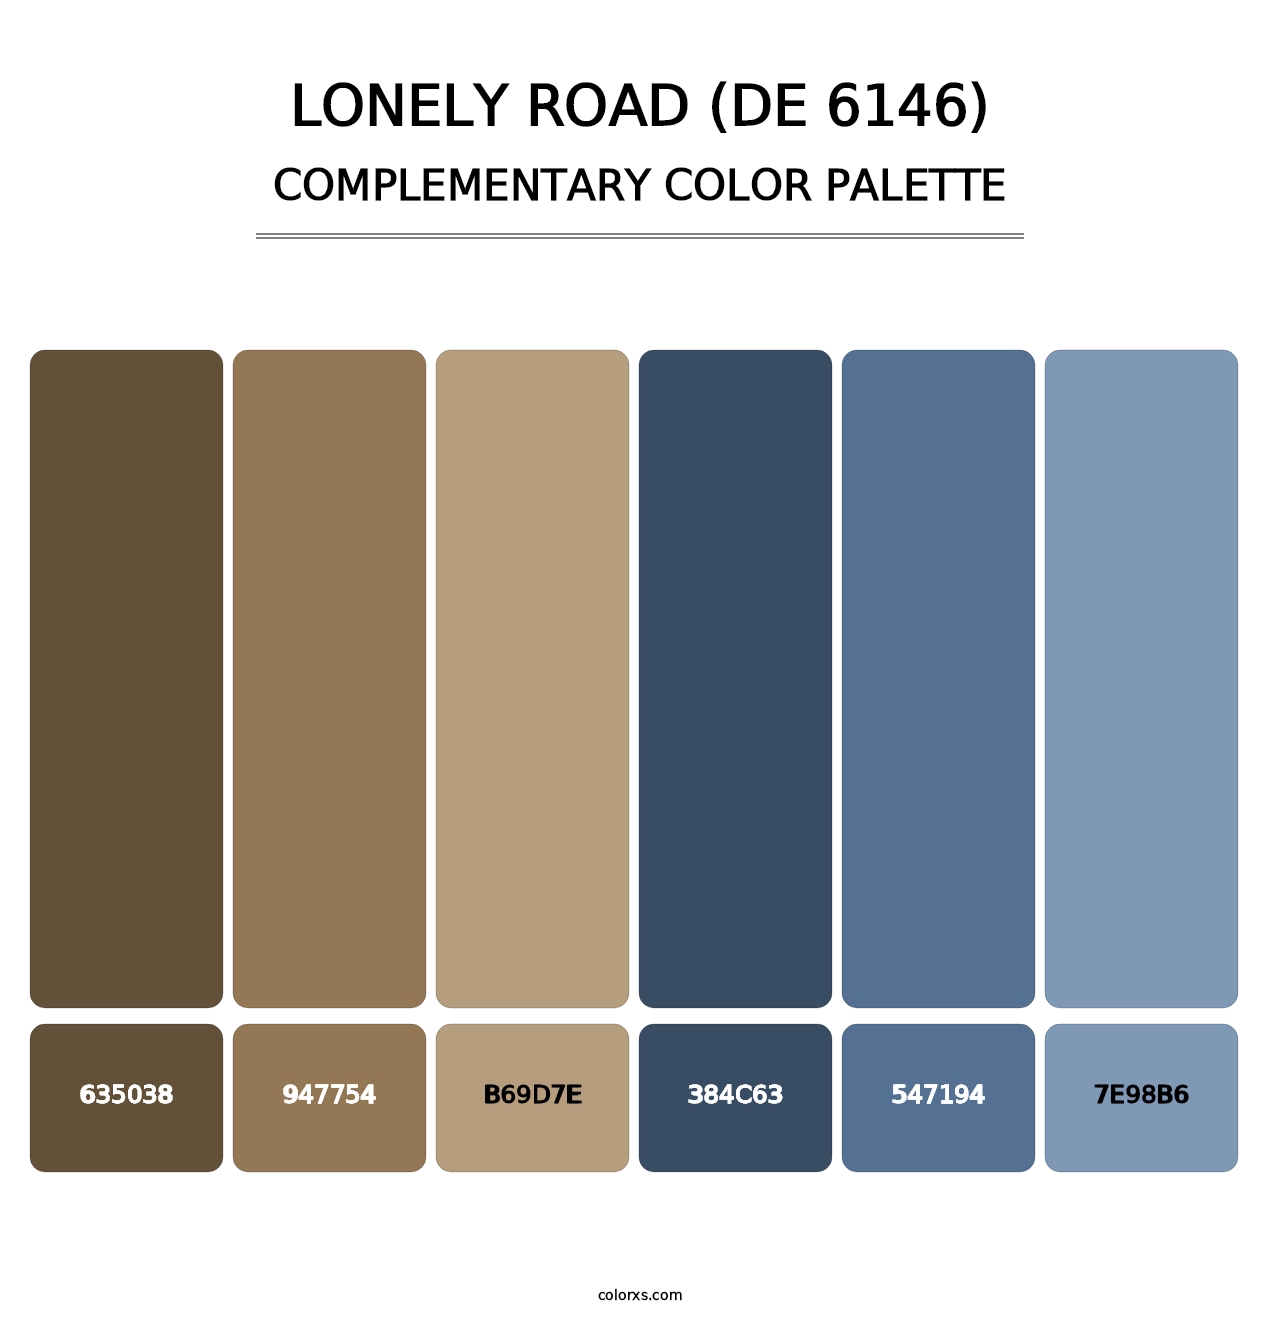 Lonely Road (DE 6146) - Complementary Color Palette